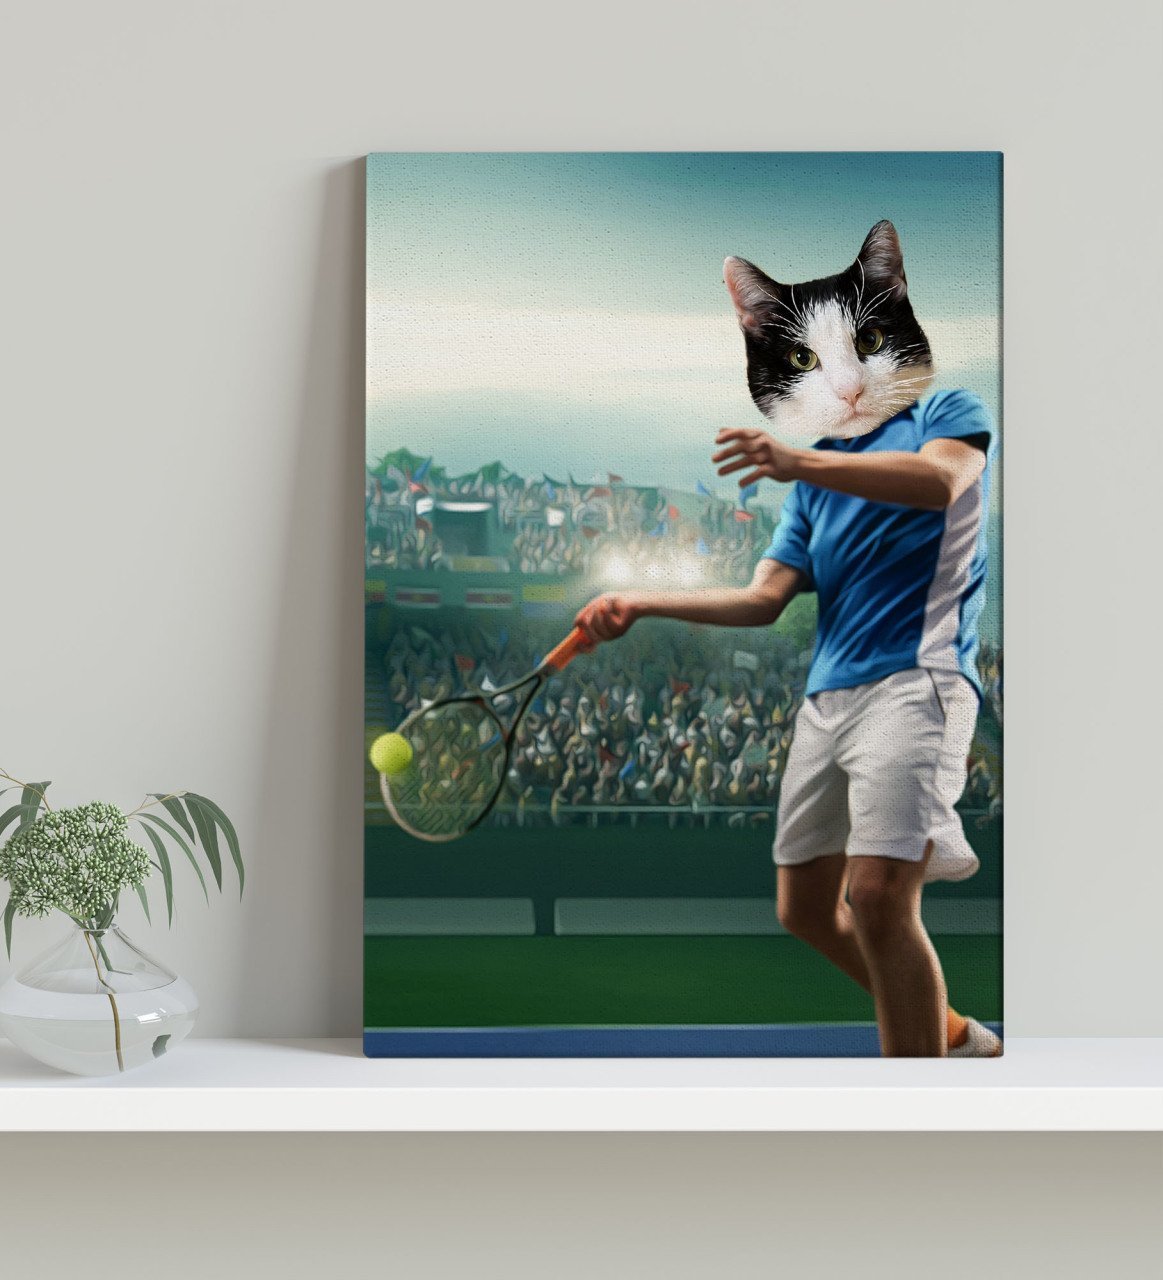 Evcil Dostlara Özel Tenis Oyuncusu Tasarımlı Portre Kanvas Tablo 30x50cm-2